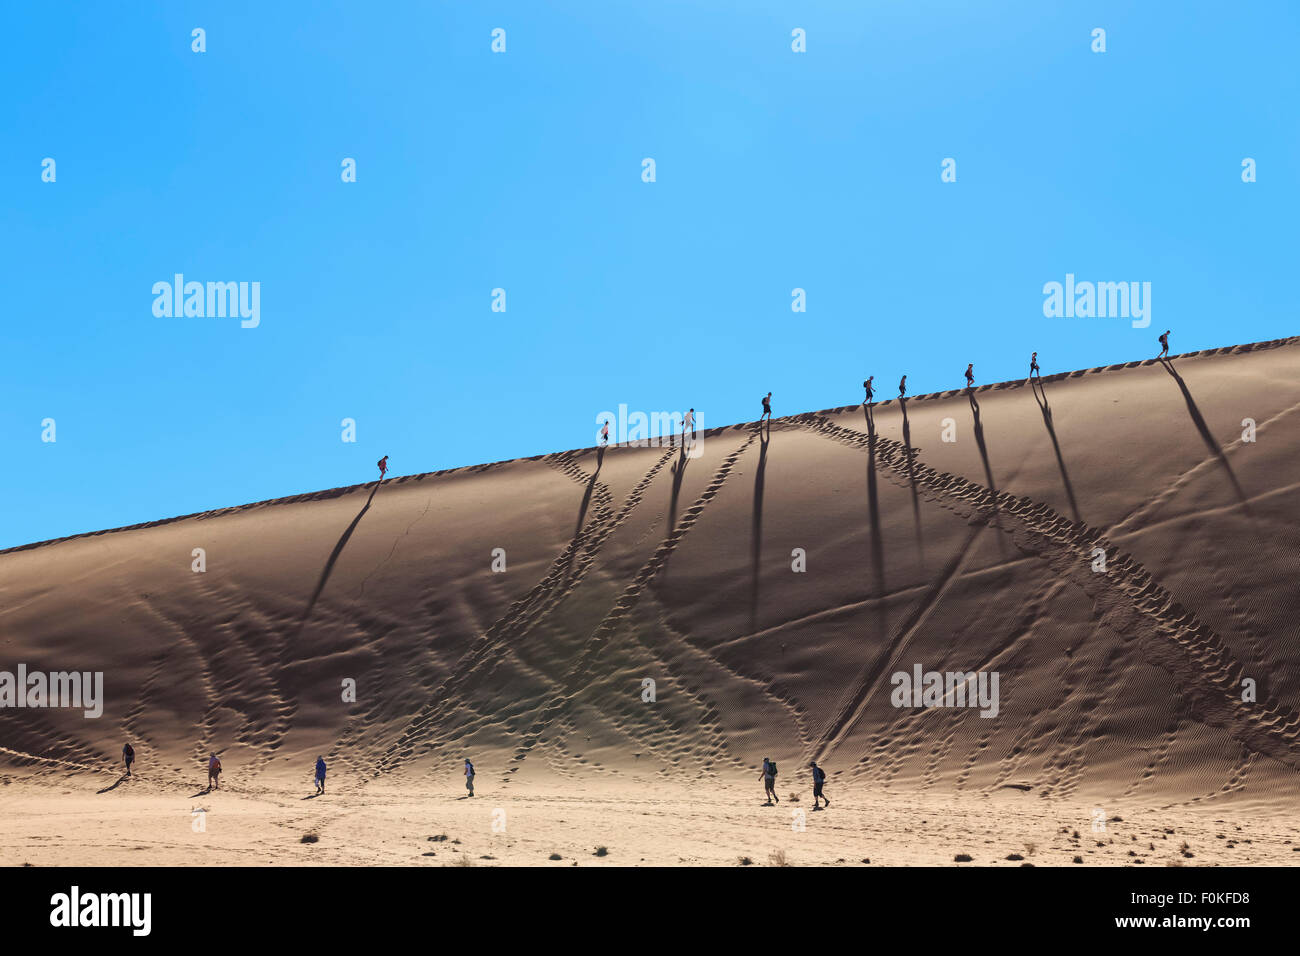 La Namibia, Namib Desert, Namib Naukluft National Park, gruppo di tour a piedi sulle dune del deserto Foto Stock